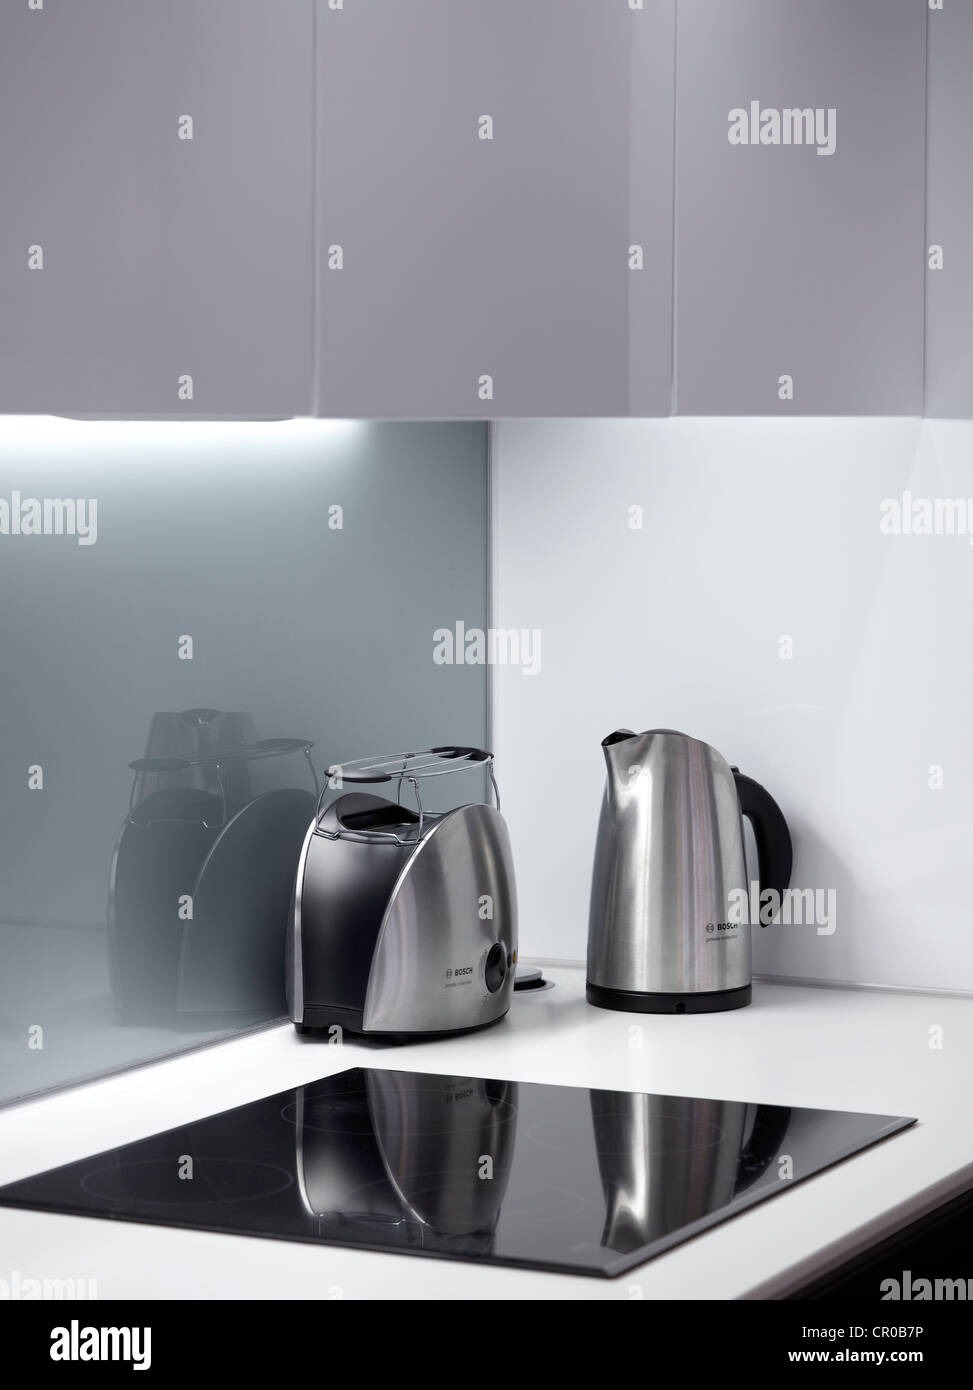 https://c8.alamy.com/comp/CR0B7P/corner-of-modern-designer-kitchen-with-hob-kettle-and-toaster-all-CR0B7P.jpg